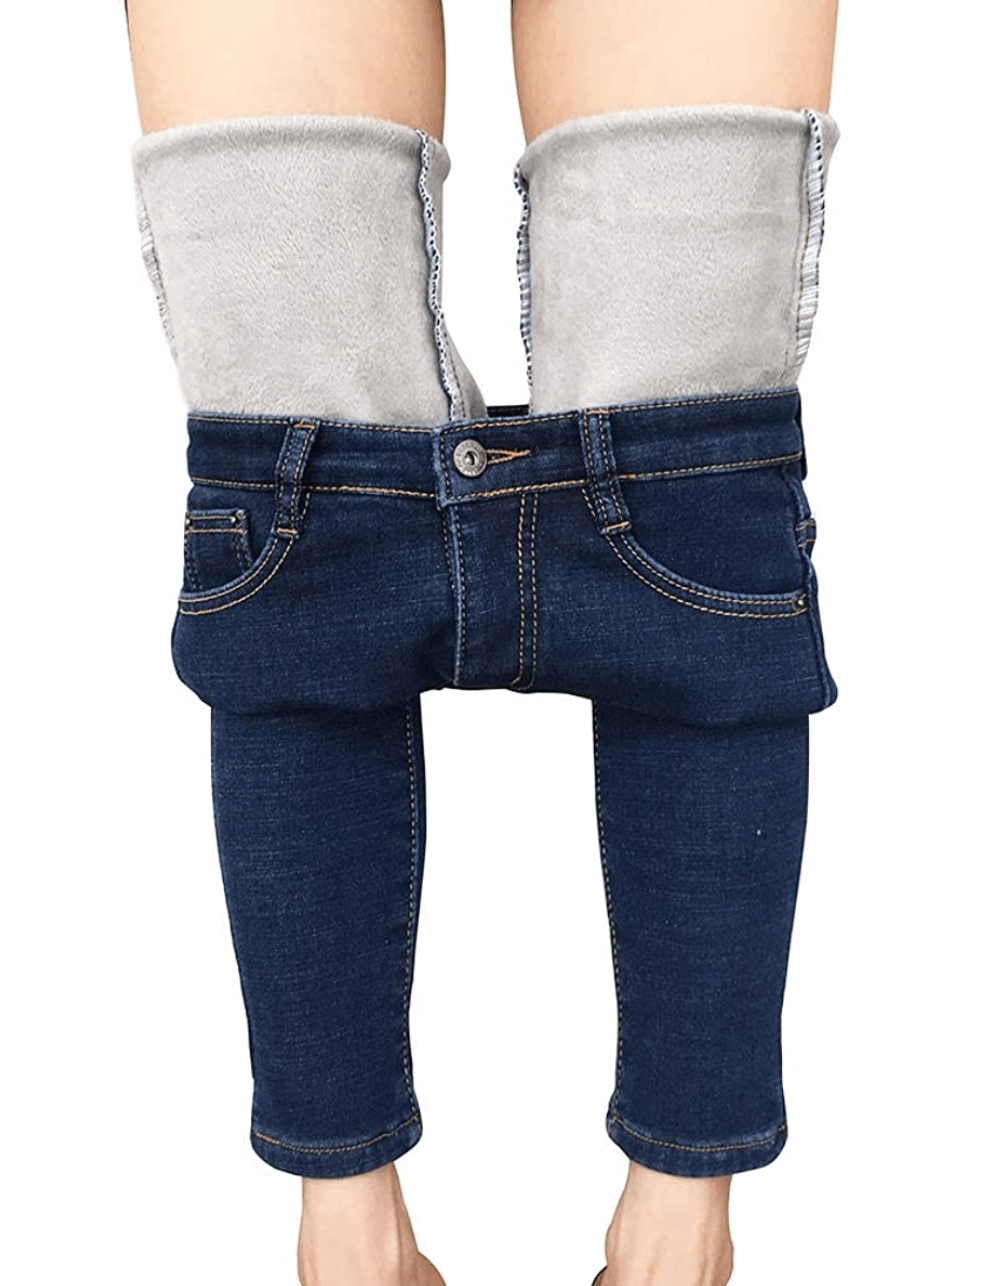 heipeiwa Women's Winter Fleece Lined Slim Stretch Skinny Jeans